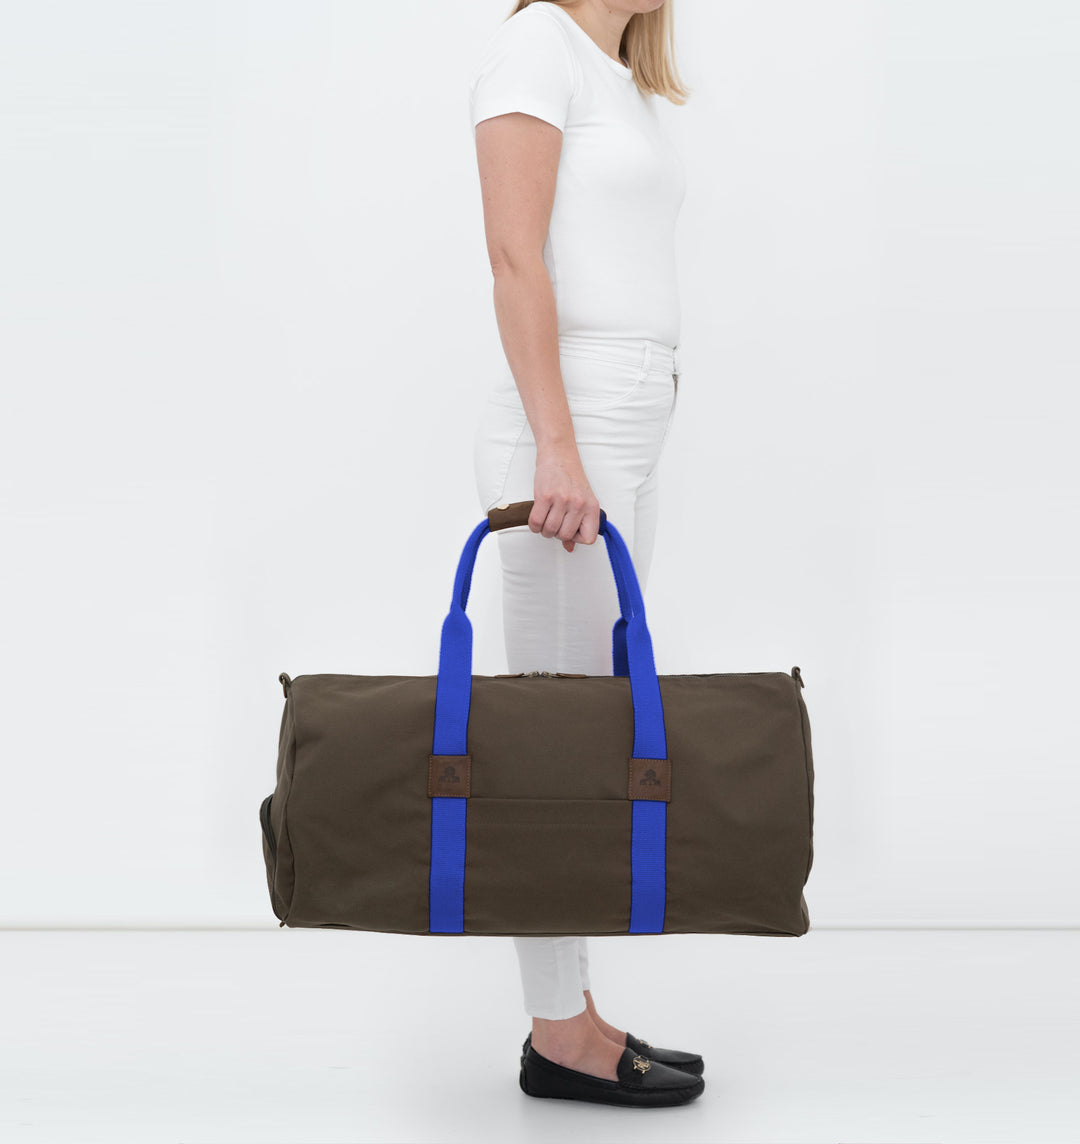 Duffle bag -L- KHAKI with blue strap